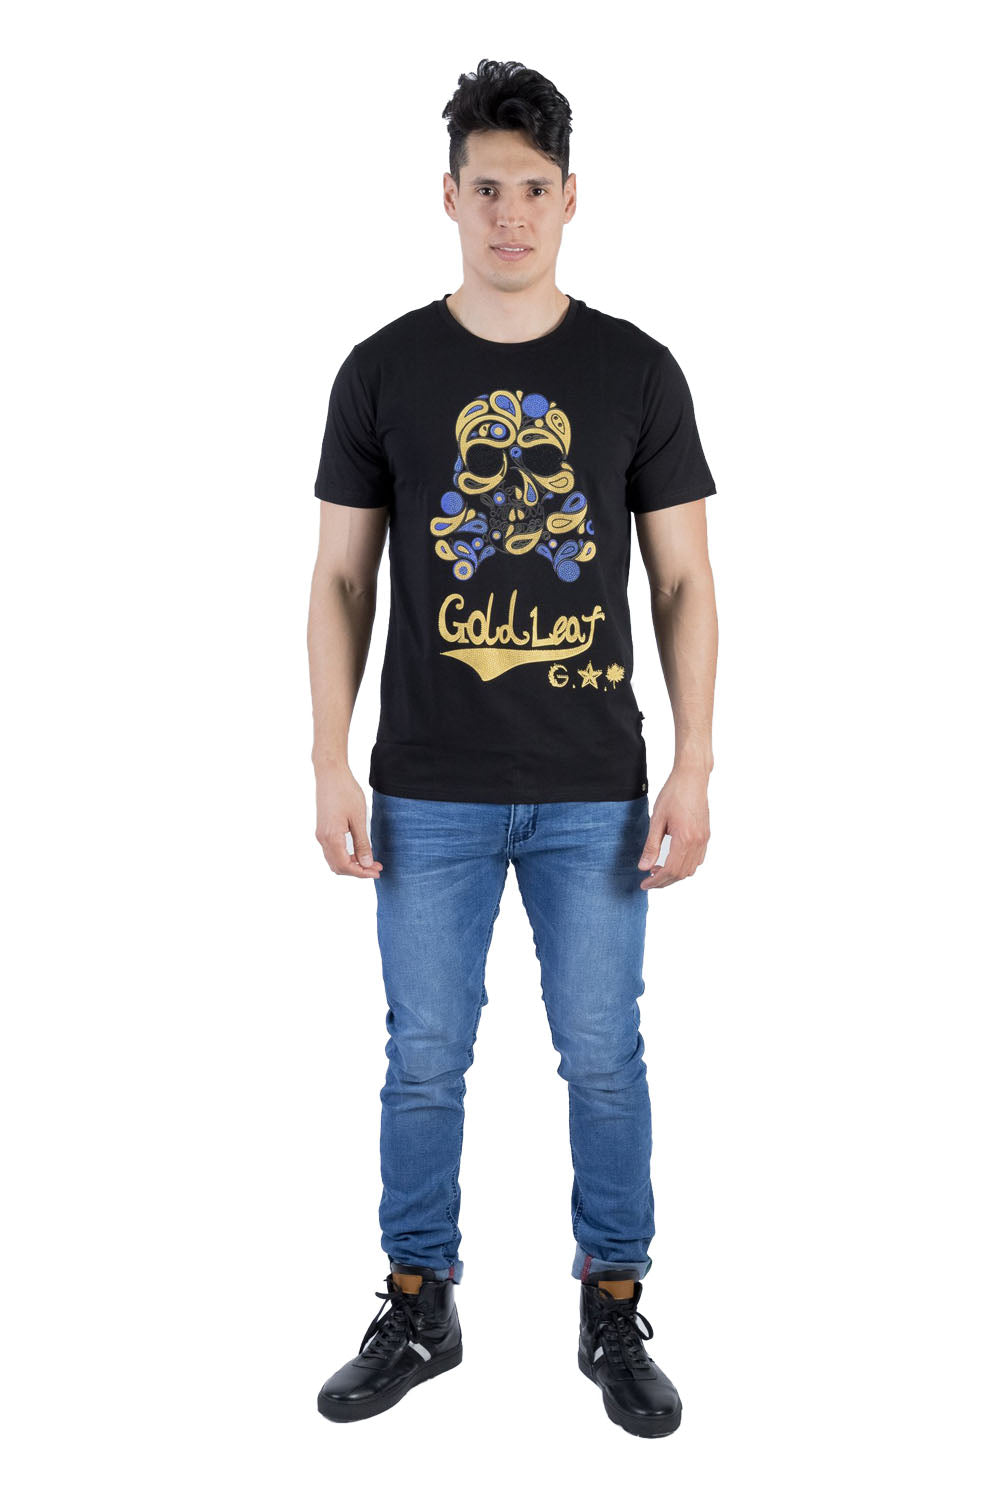 BARABAS Men's Printed Graphic Skull Modern T-shirt TR568 Black